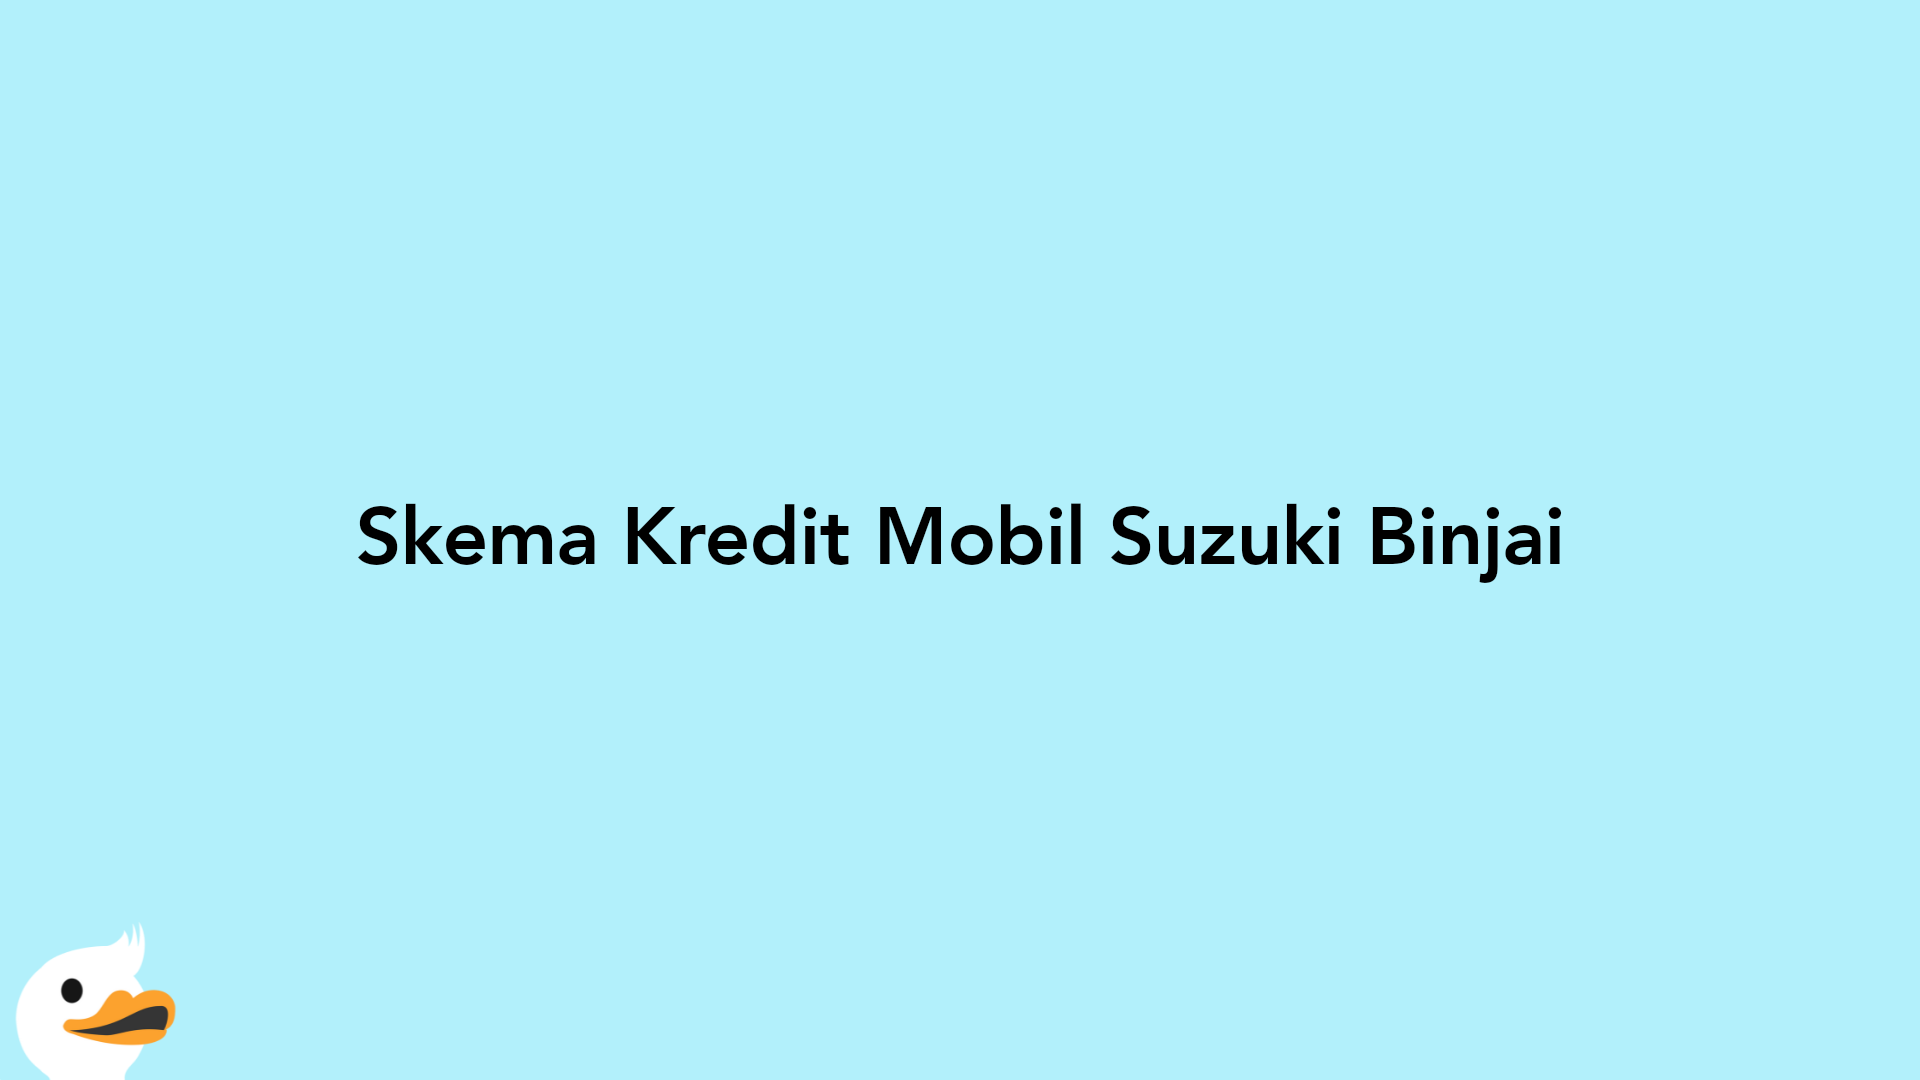 Skema Kredit Mobil Suzuki Binjai